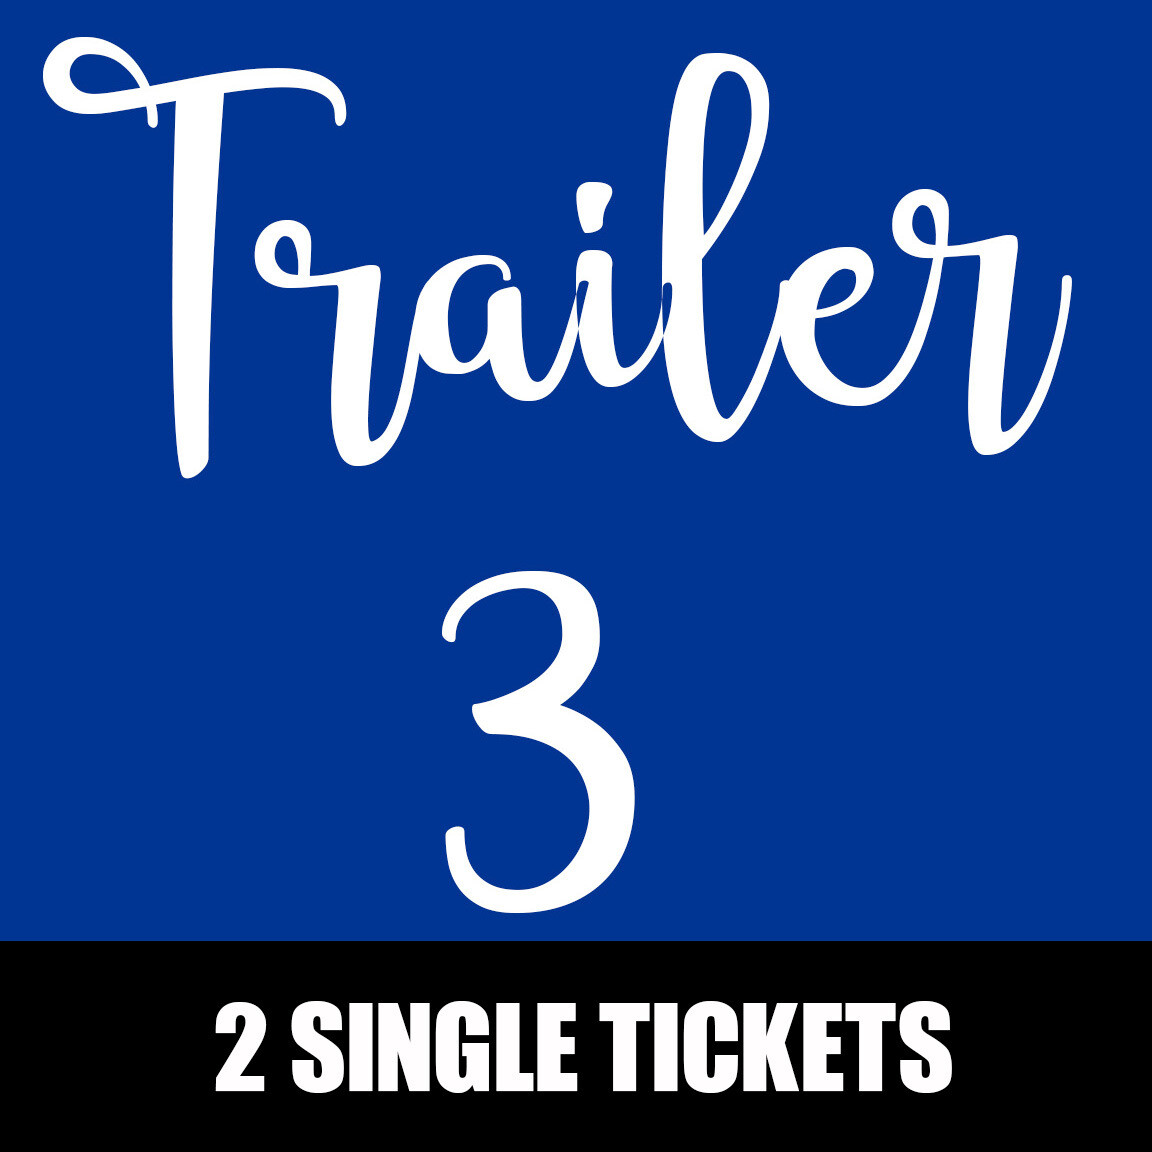 Trailer 3 - December 2nd @ 10pm - 2 Single Tickets